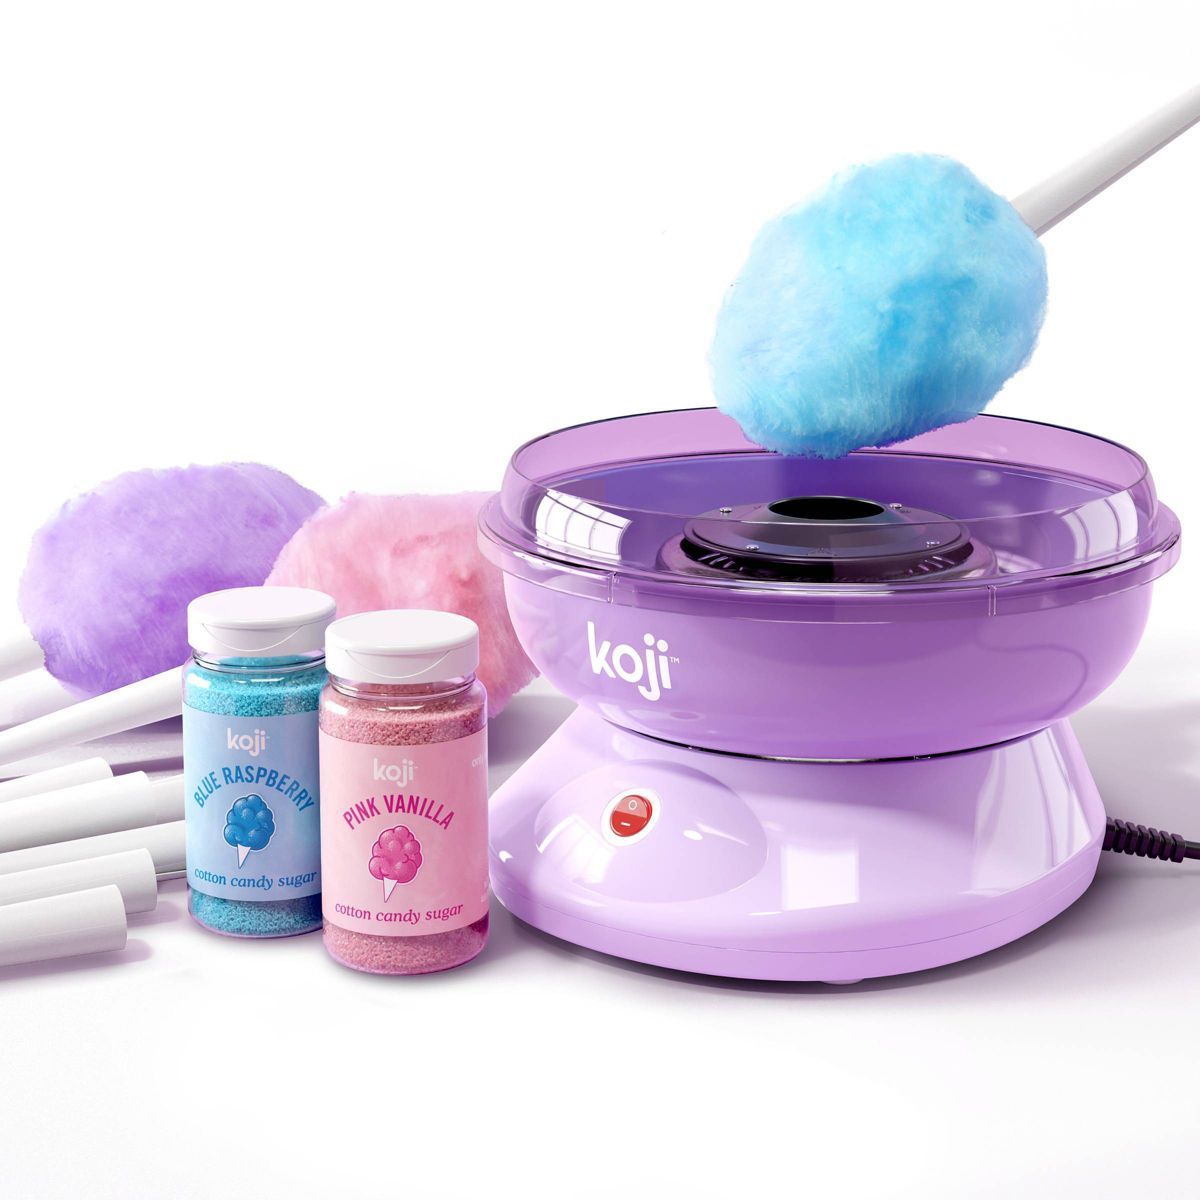 Koji Cotton Candy Maker Set | Target